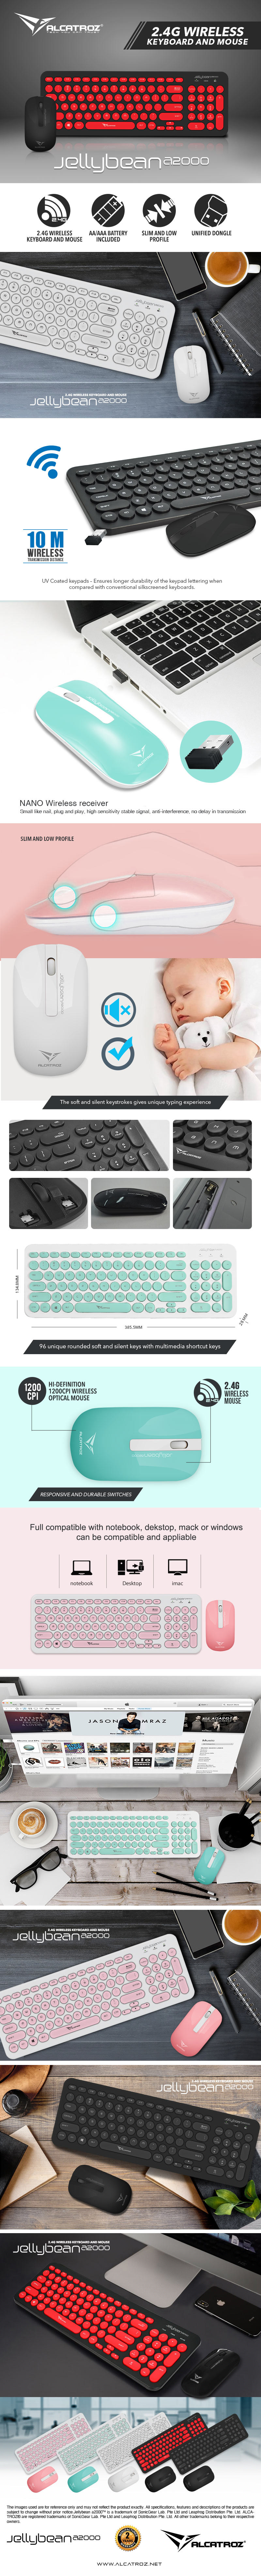 Wireless-Keyboards-Alcatroz-Jellybean-A2000-Wireless-Keyboard-Mouse-Combo-Black-2